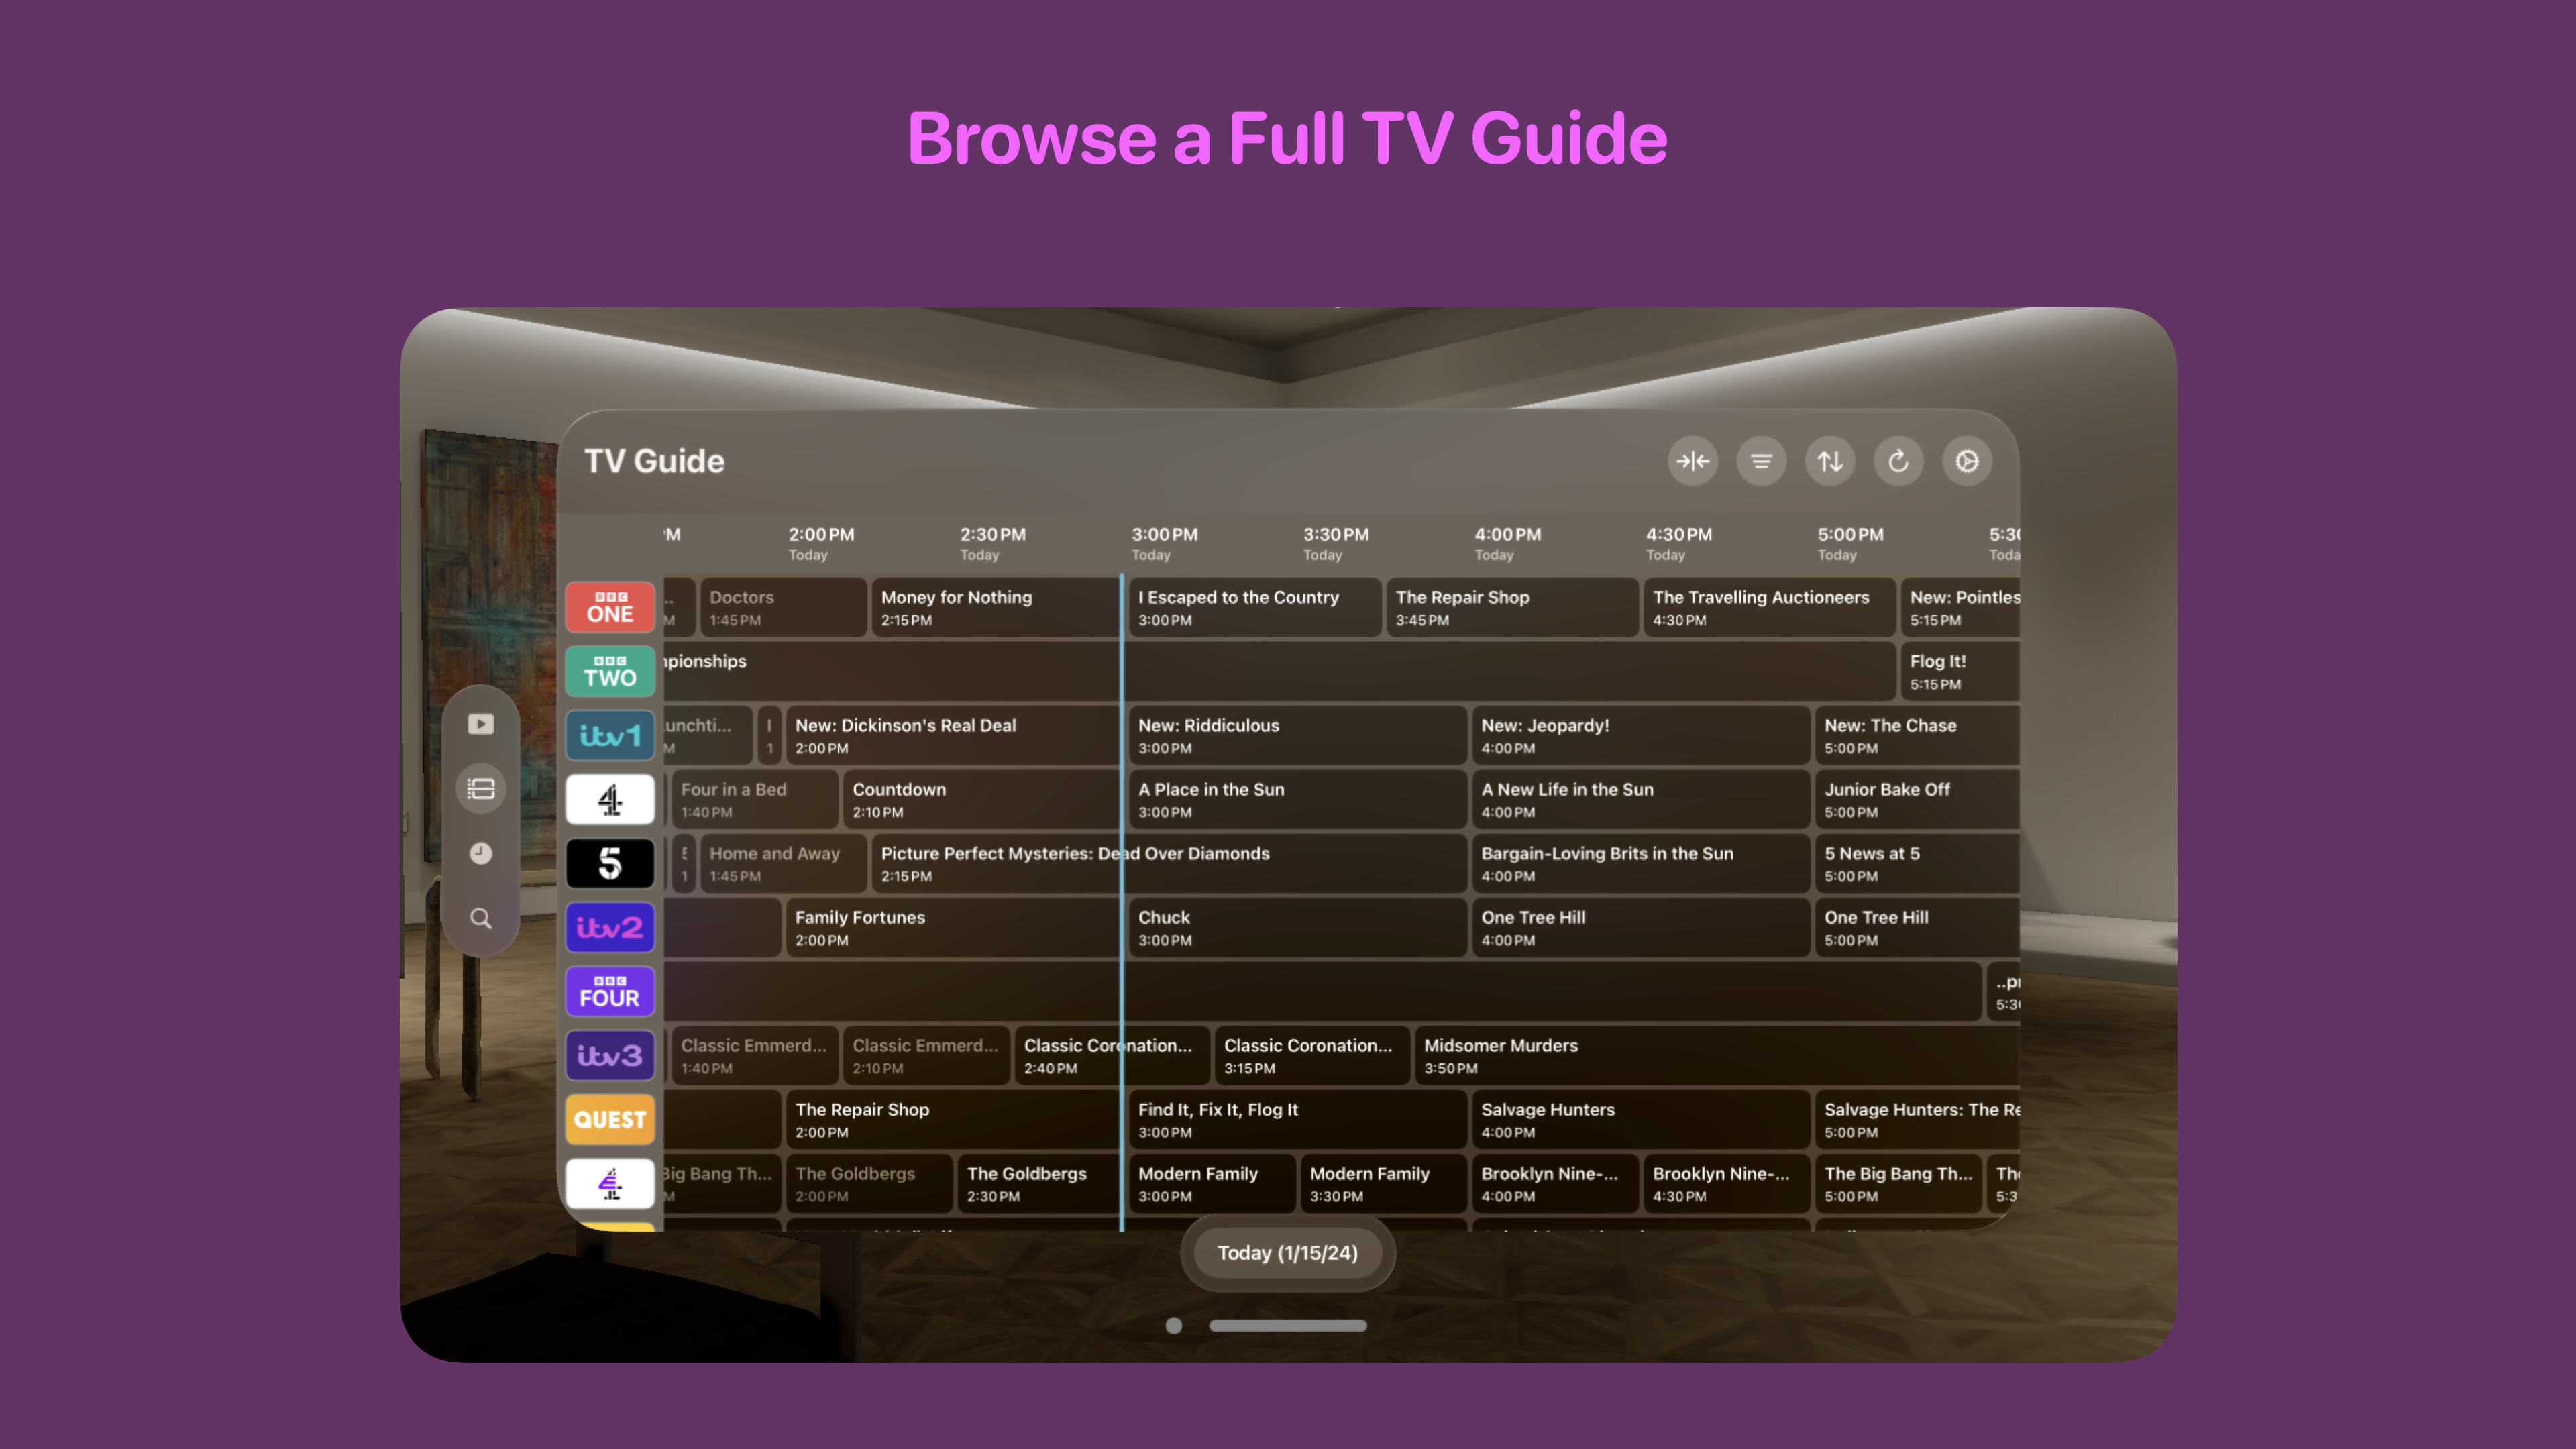 TV Launcher Screenshot